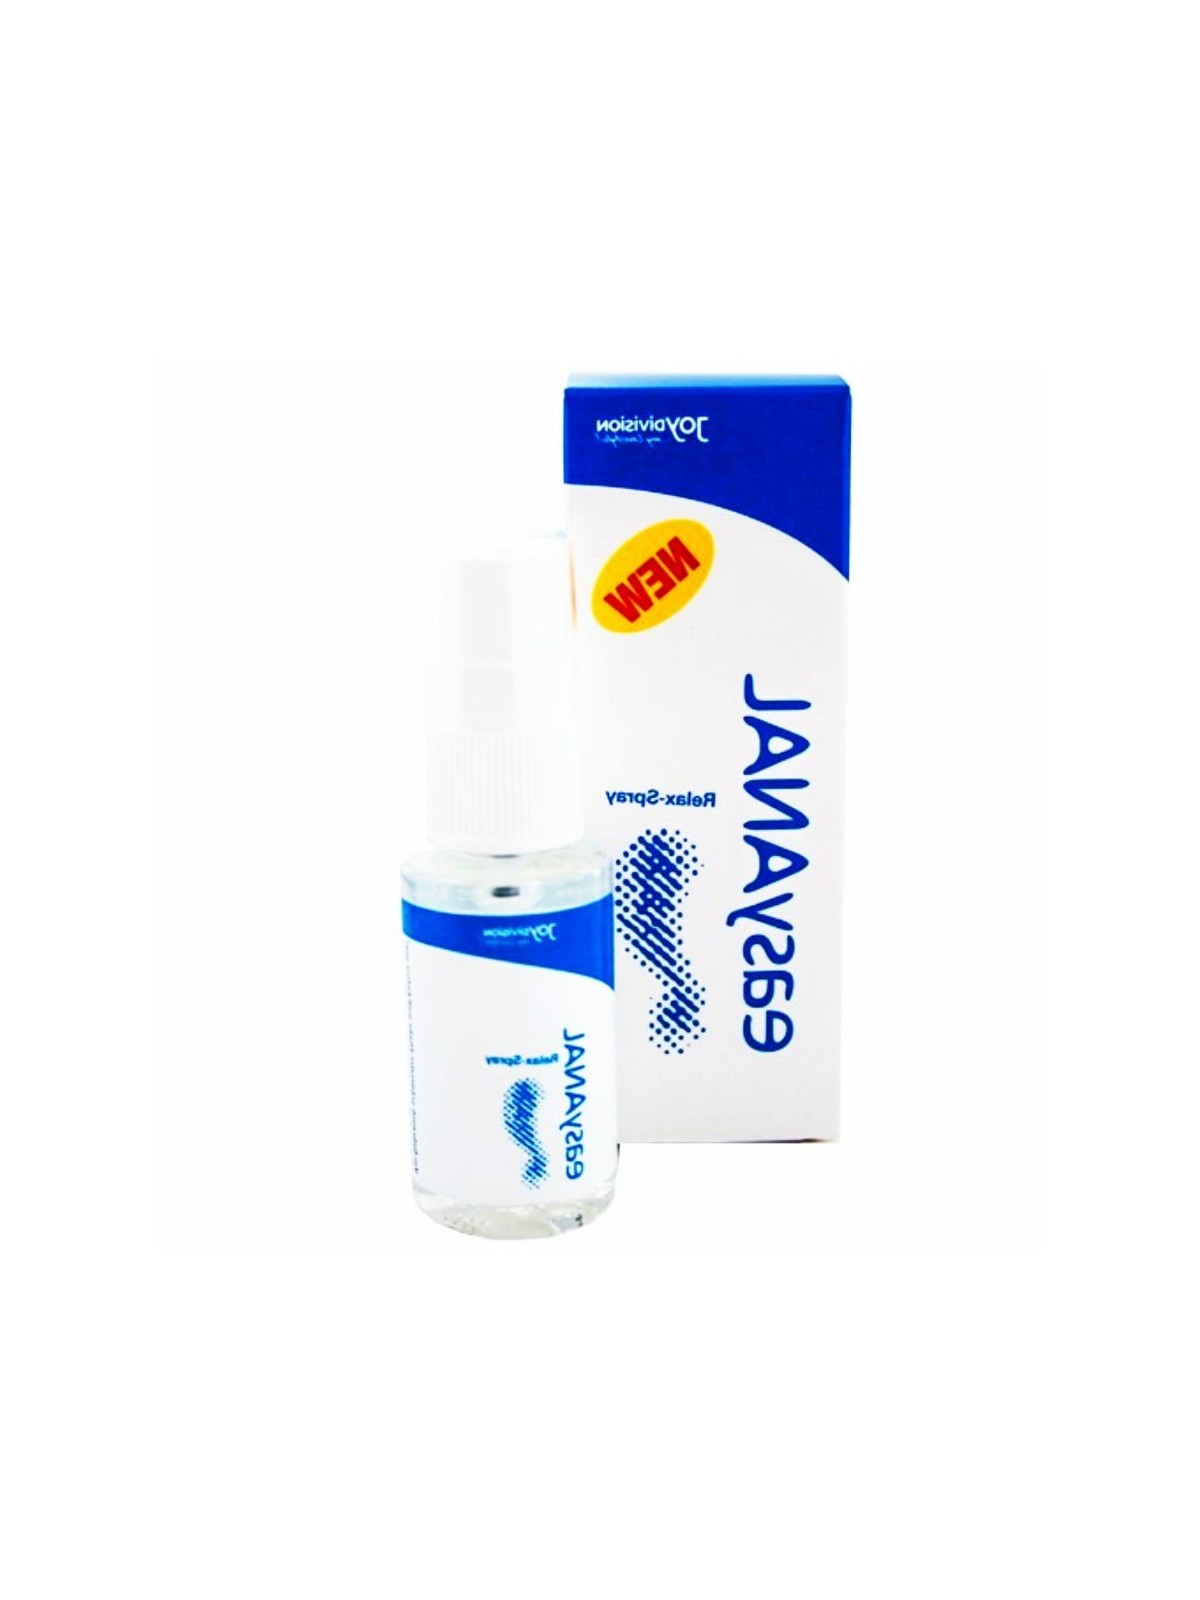 Easyanal Lubricante Spray Relax - Comprar Relajante anal Easyanal - Lubricantes relajante anal (1)